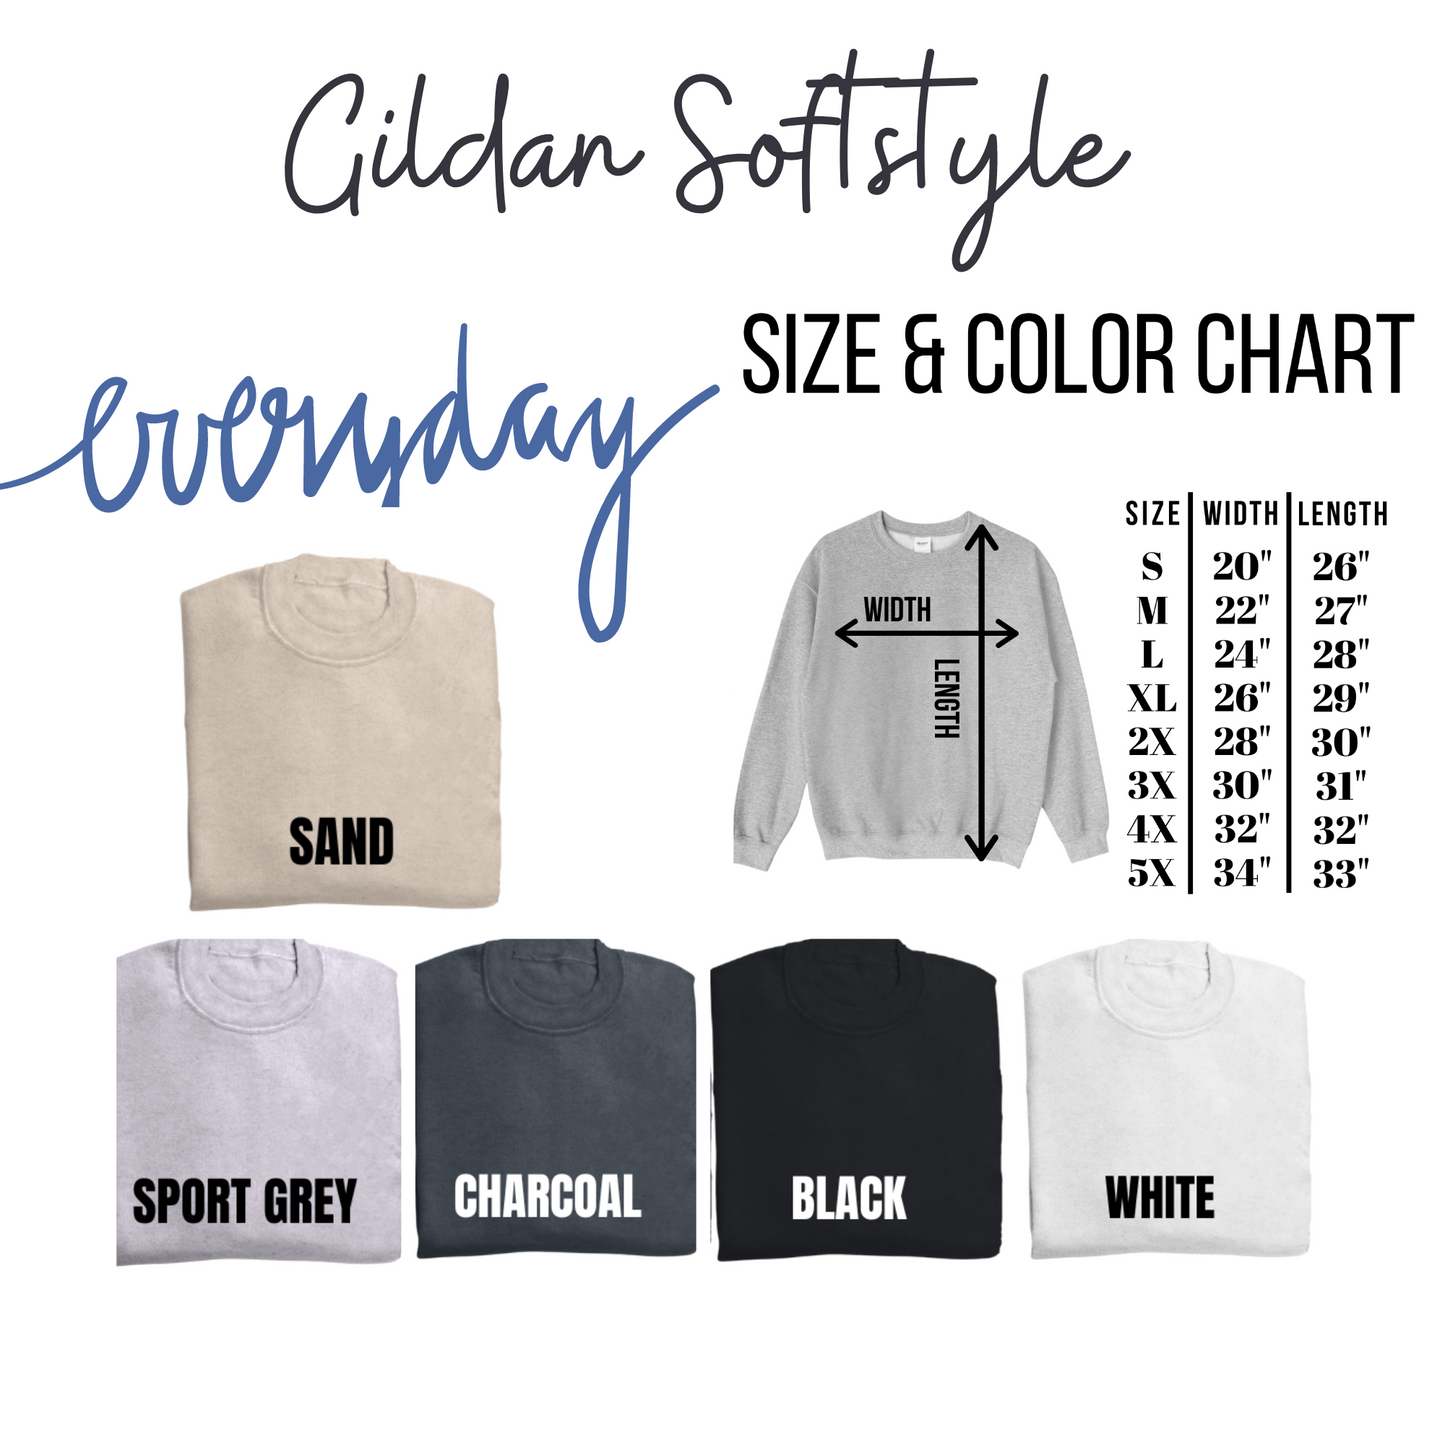 Salem University Hocus Pocus Gildan Softstyle Sweatshirt